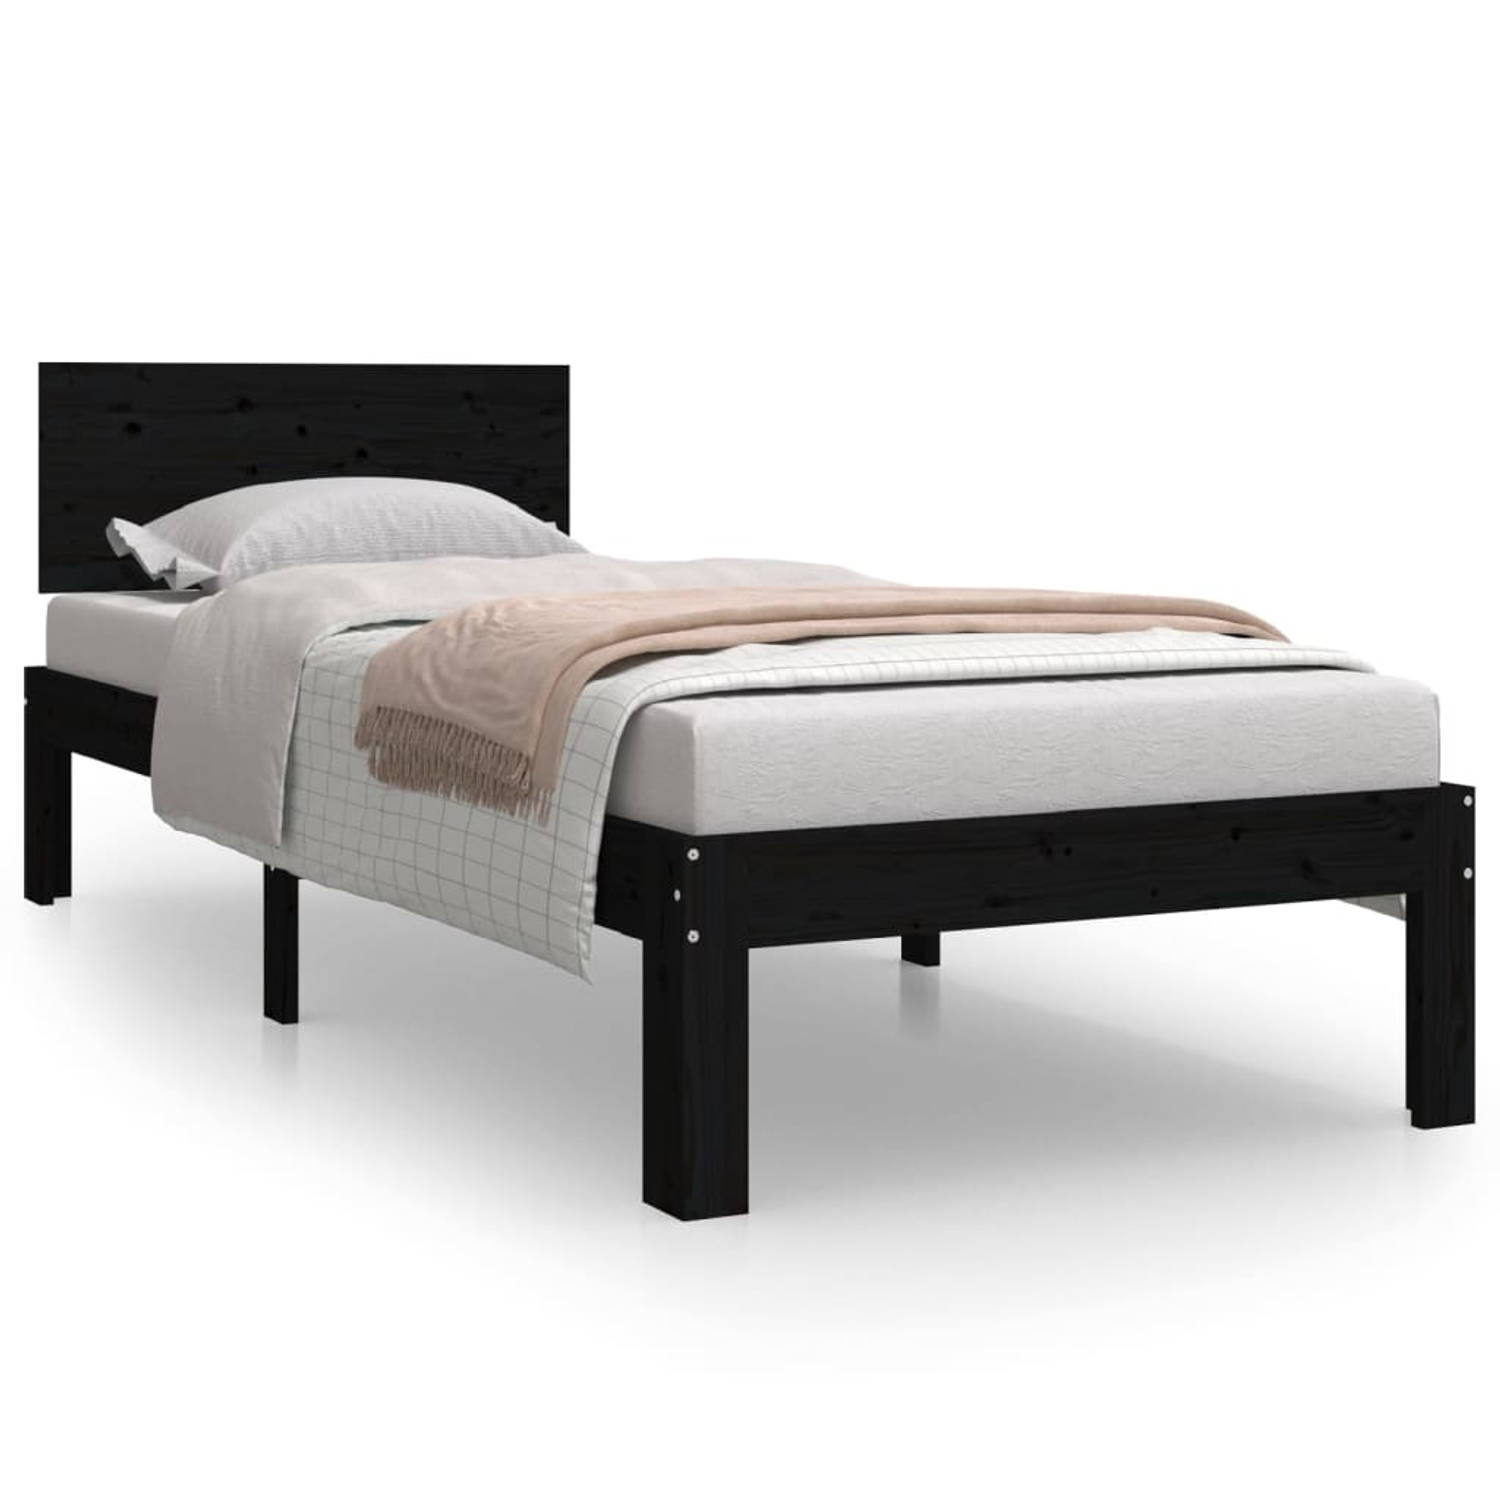 The Living Store Bedframe massief hout zwart 75x190 cm 2FT6 Small Single - Bedframe - Bedframes - Bed - Bedbodem - Ledikant - Bed Frame - Massief Houten Bedframe - Slaapmeubel - Be